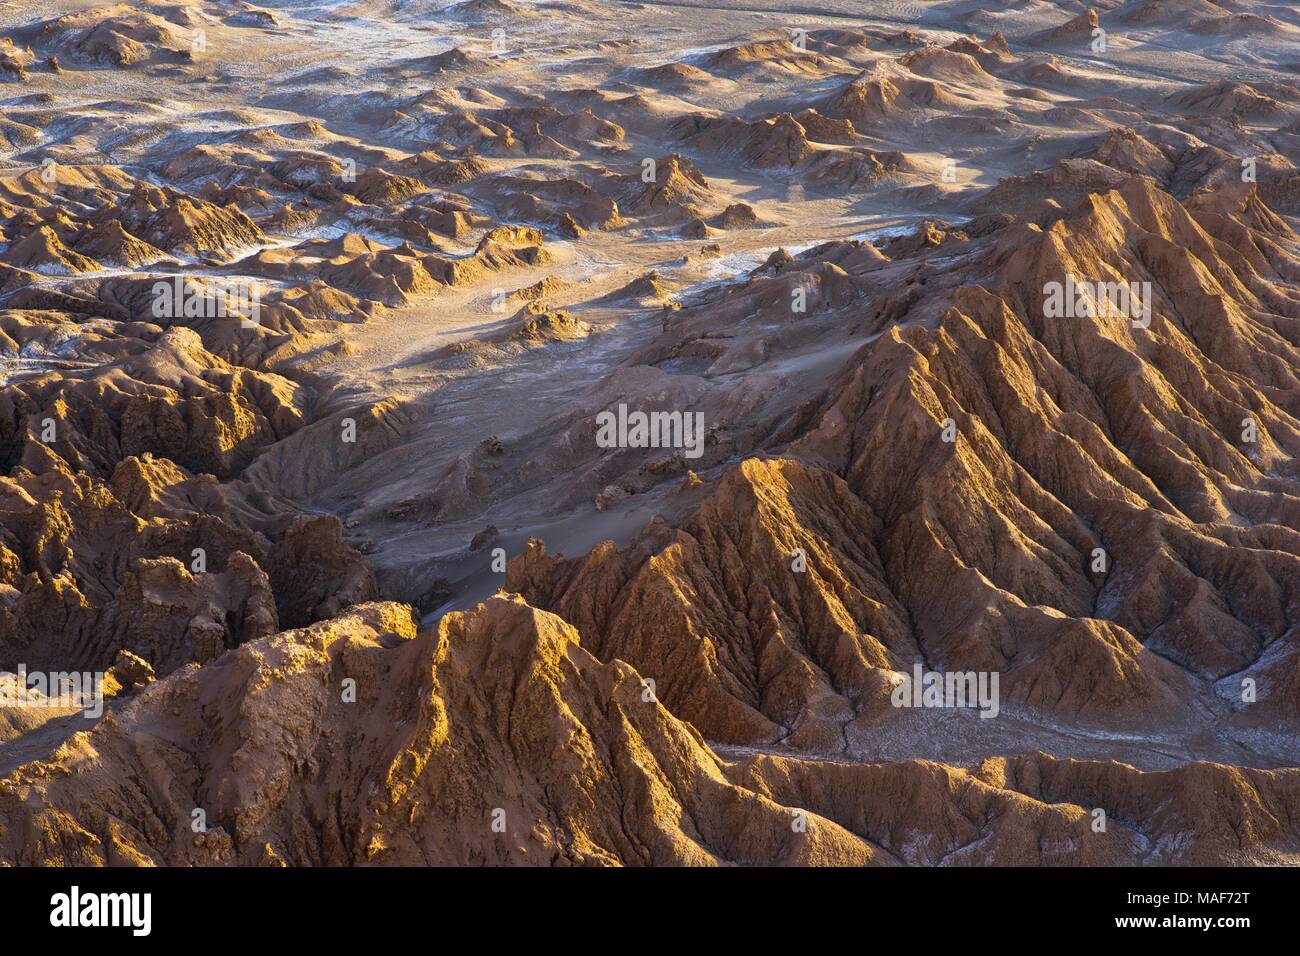 Geologischen Felsformationen des Valle de la Luna in der Atacama-wüste, Chile Stockfoto